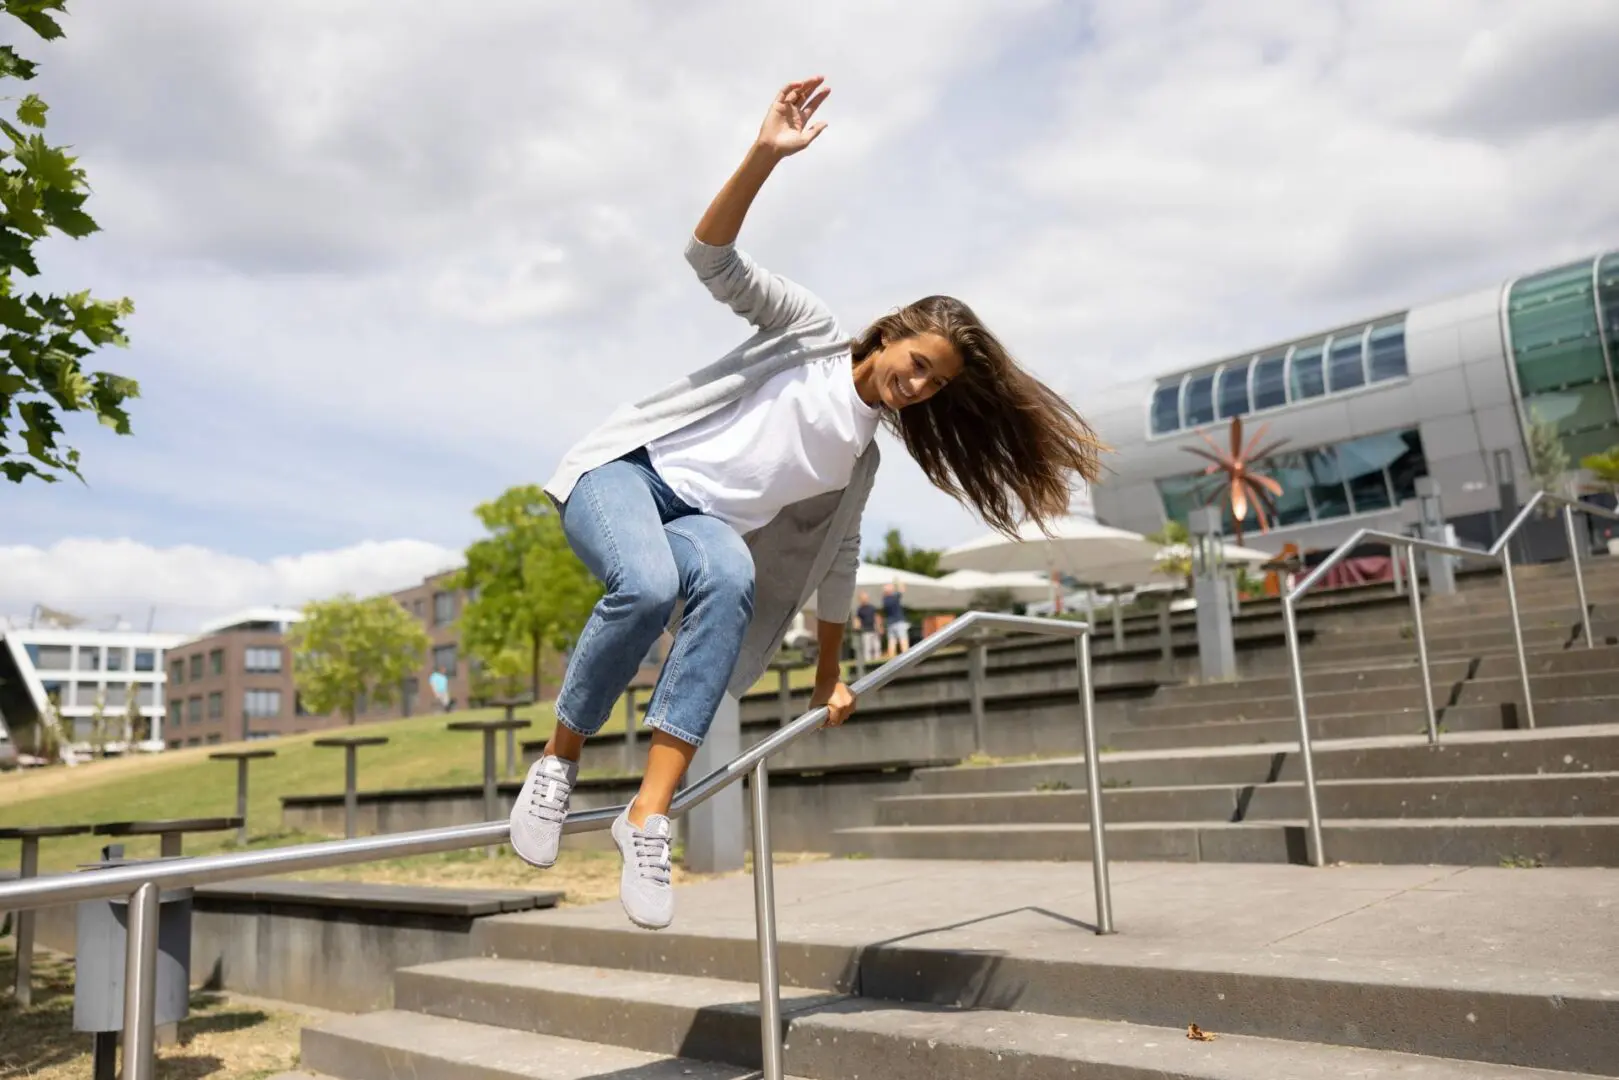 A girl is doing tricks on her skateboard.